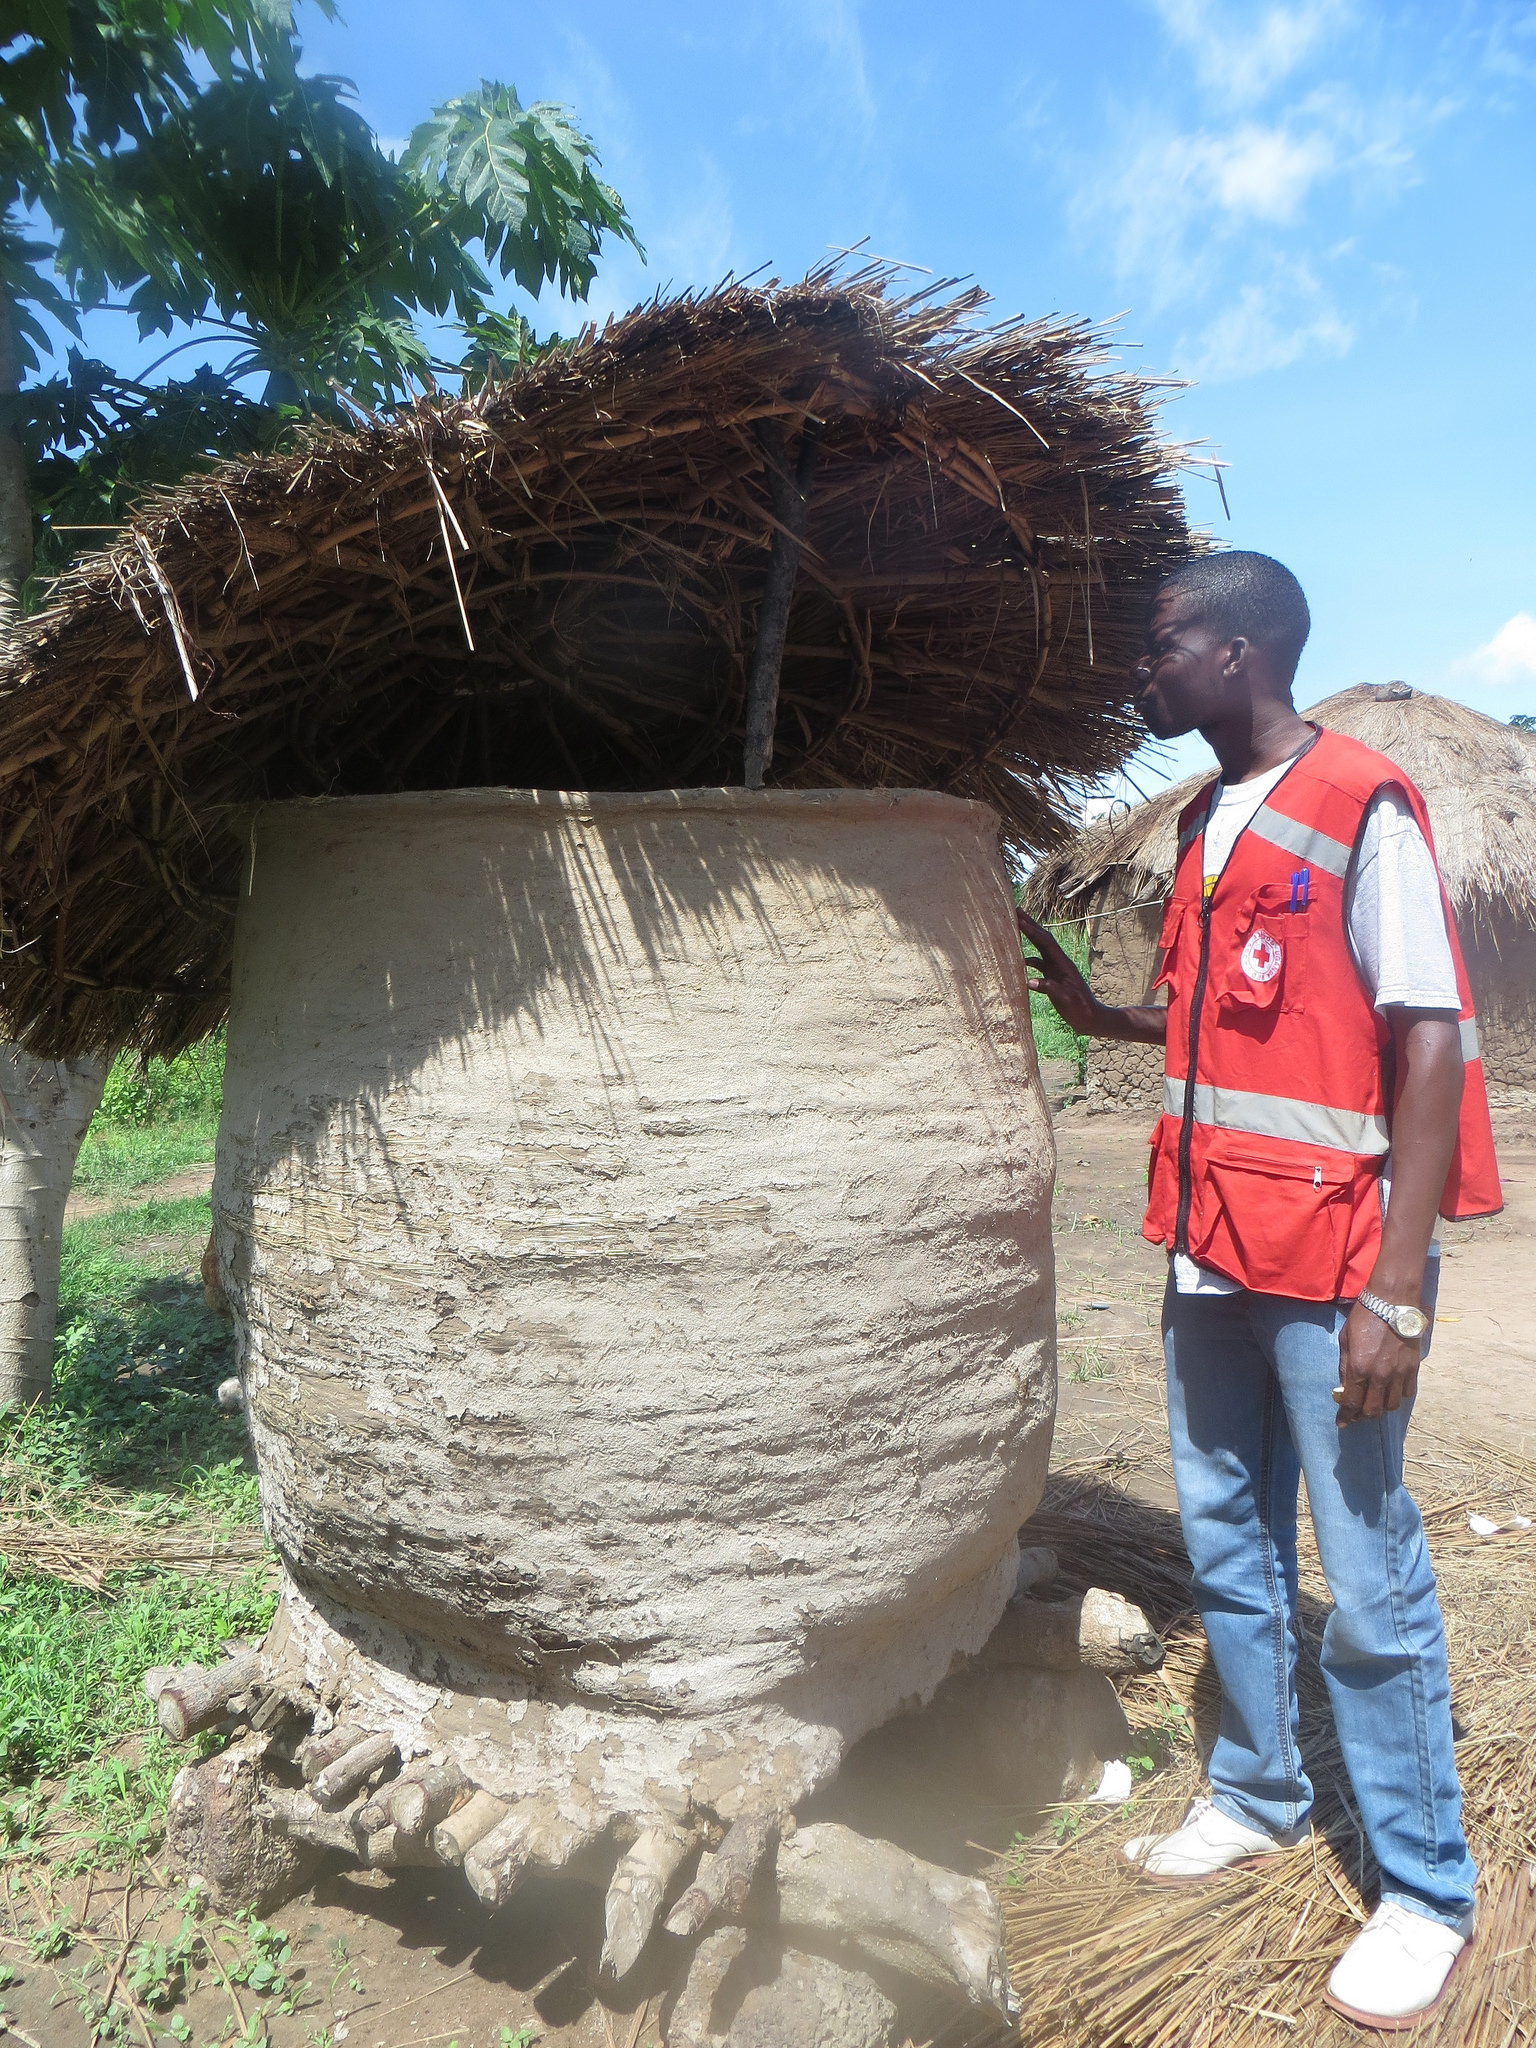 DRK helper views local village